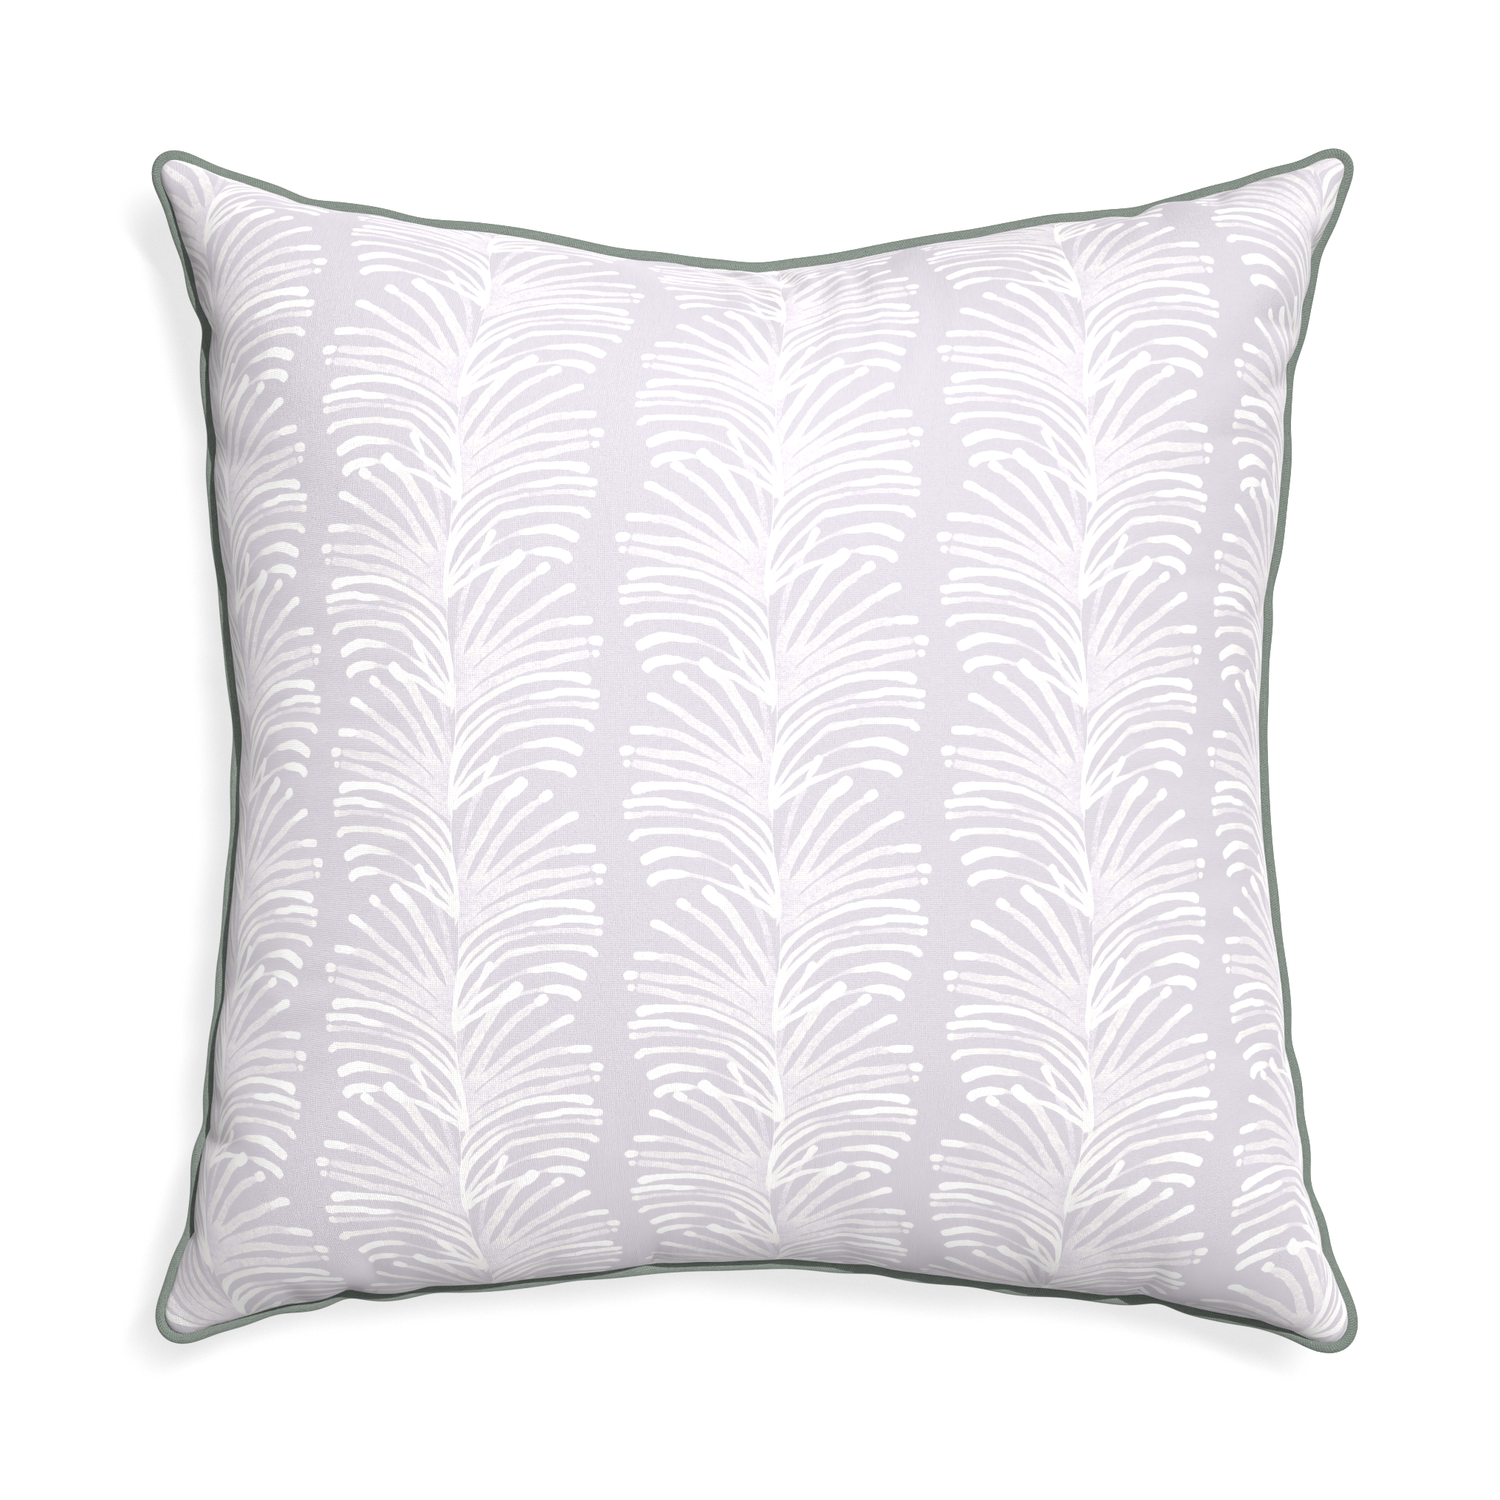 Euro-sham emma lavender custom lavender botanical stripepillow with sage piping on white background